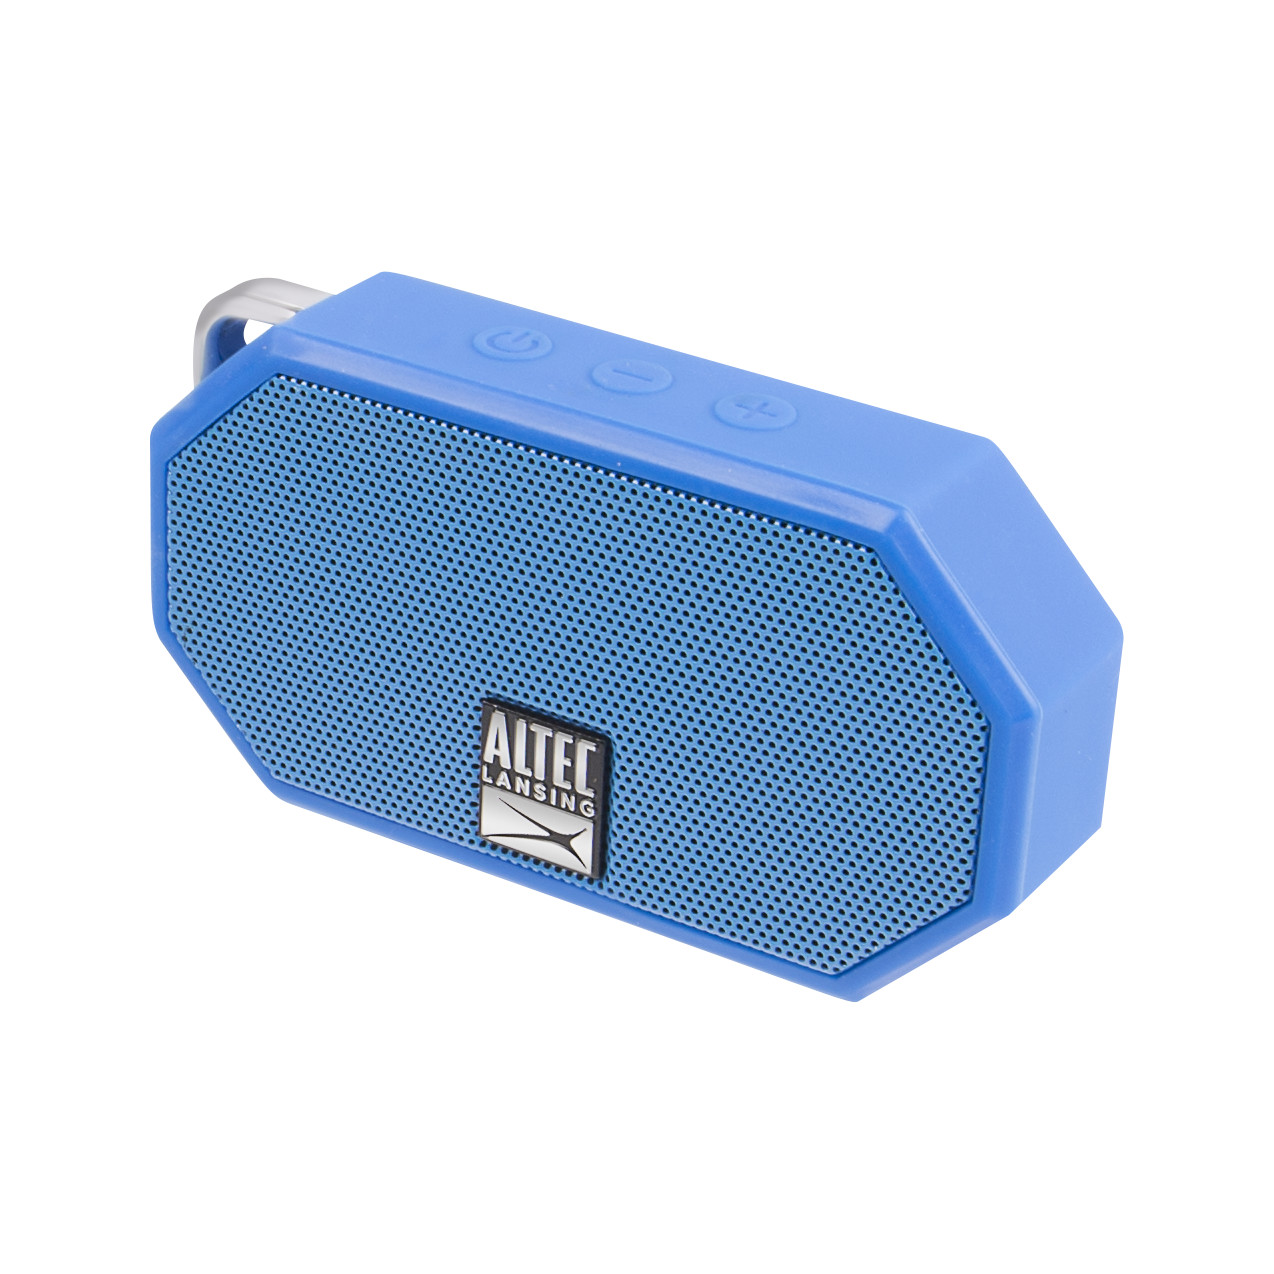 Altec Lansing Mini H2O 3 Portable Waterproof Bluetooth Speaker Blue - image 5 of 11